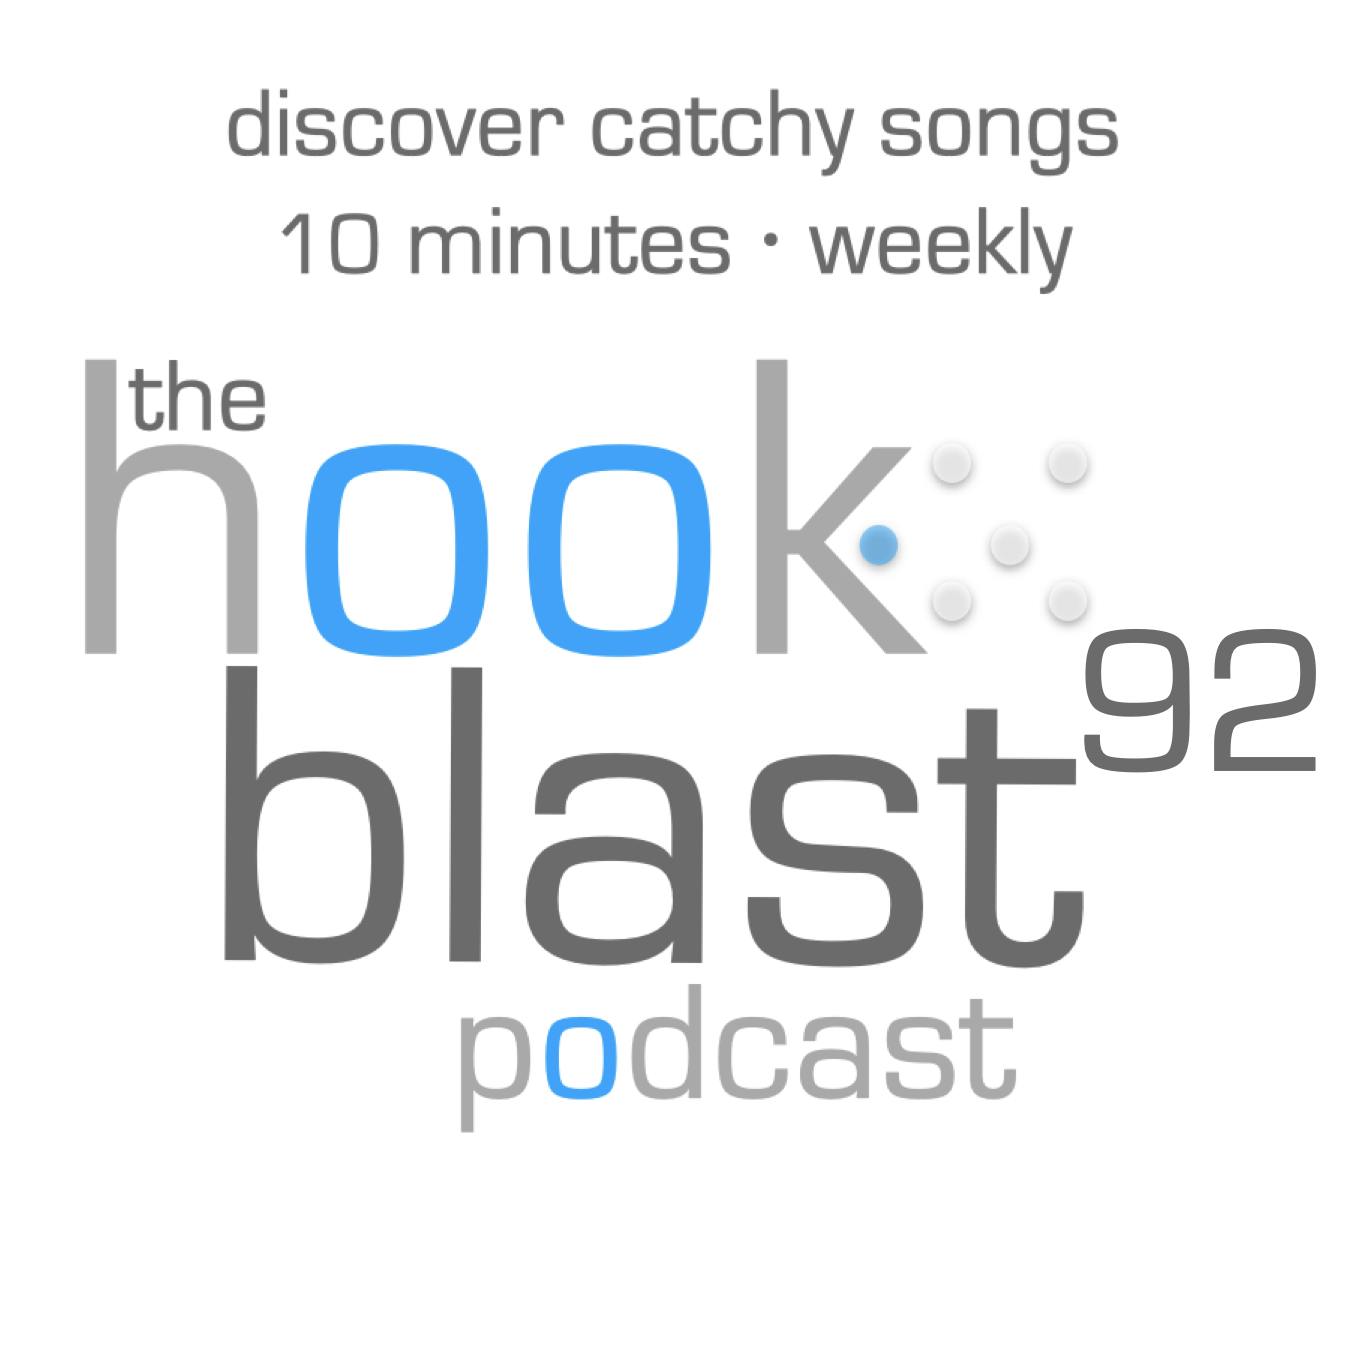 The Hookblast Podcast - Episode 92